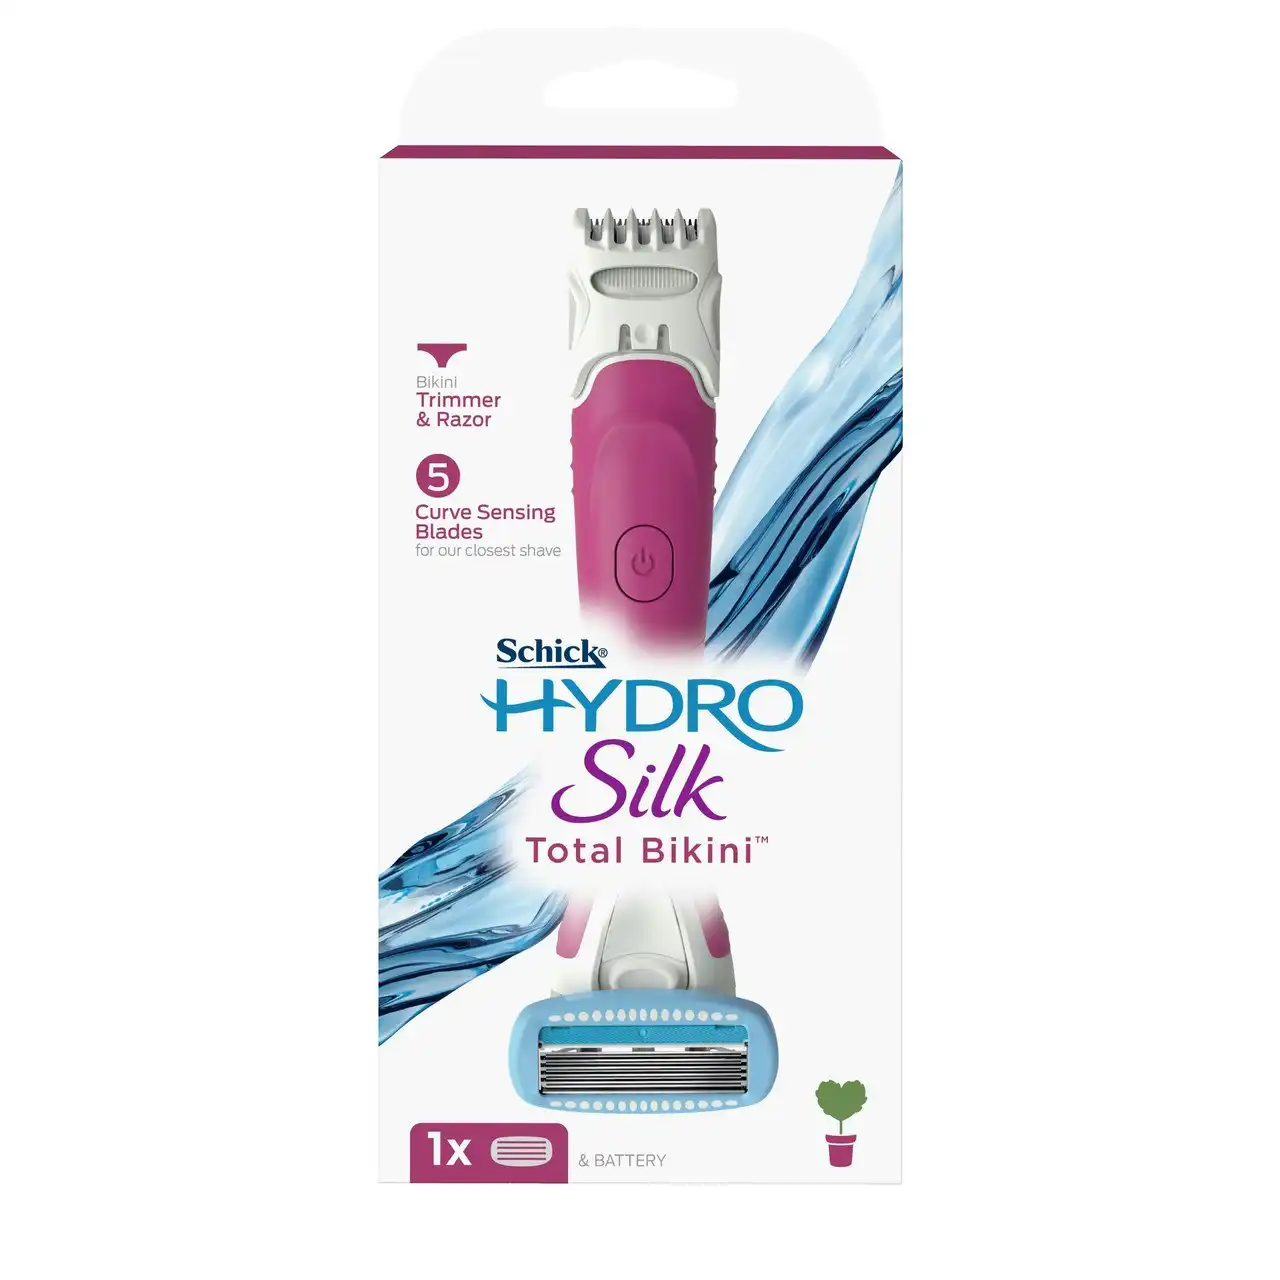 Schick Hydro Silk Total Bikini Kit +1